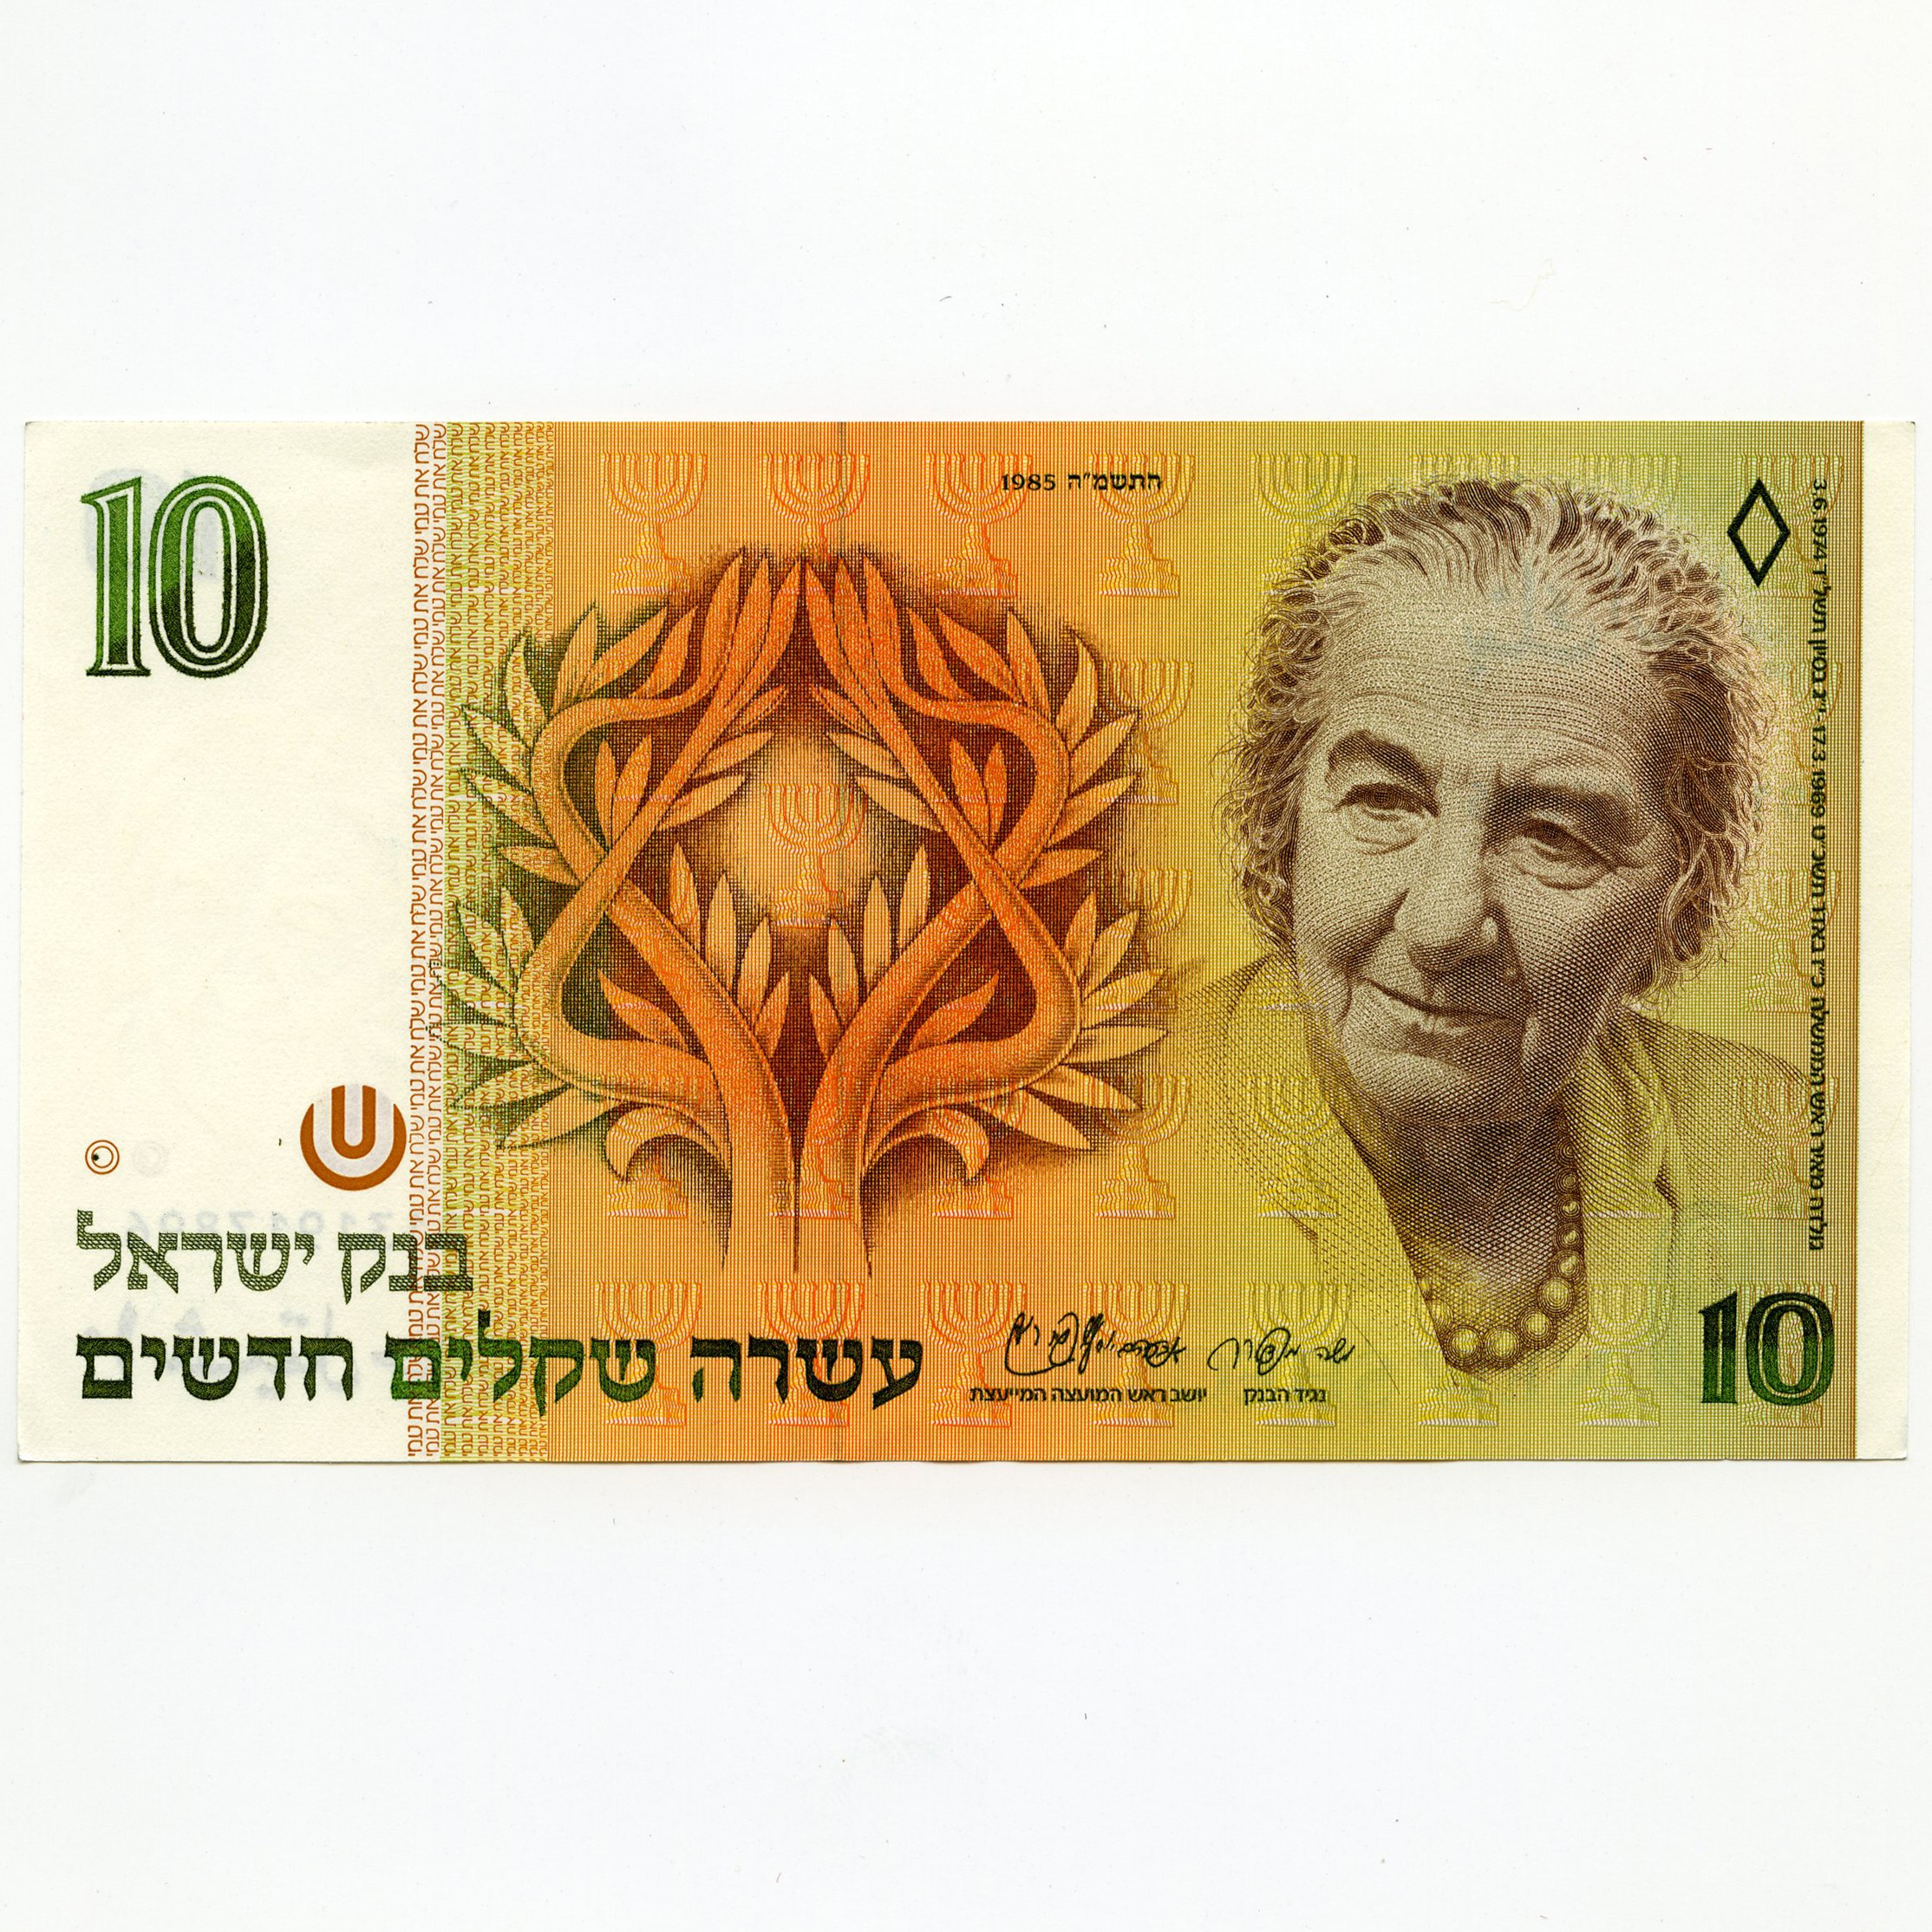 Israël - 10 New Sheqalim - 0131917896 avers